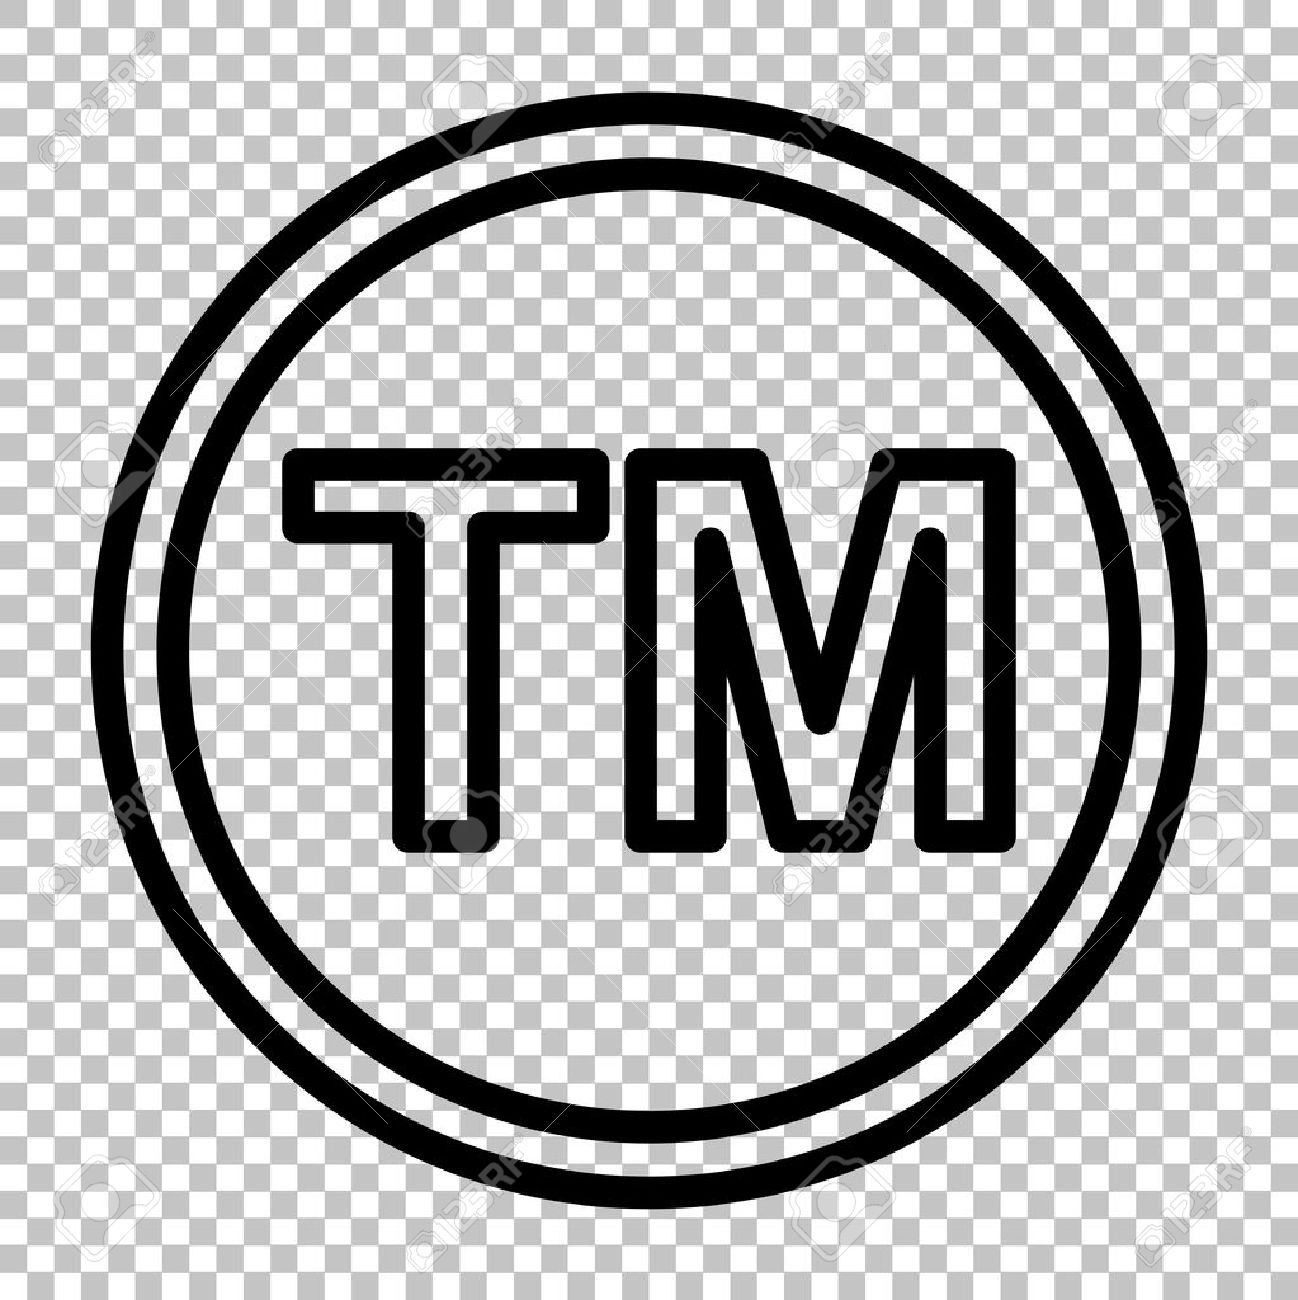 tm trademark symbol copy paste